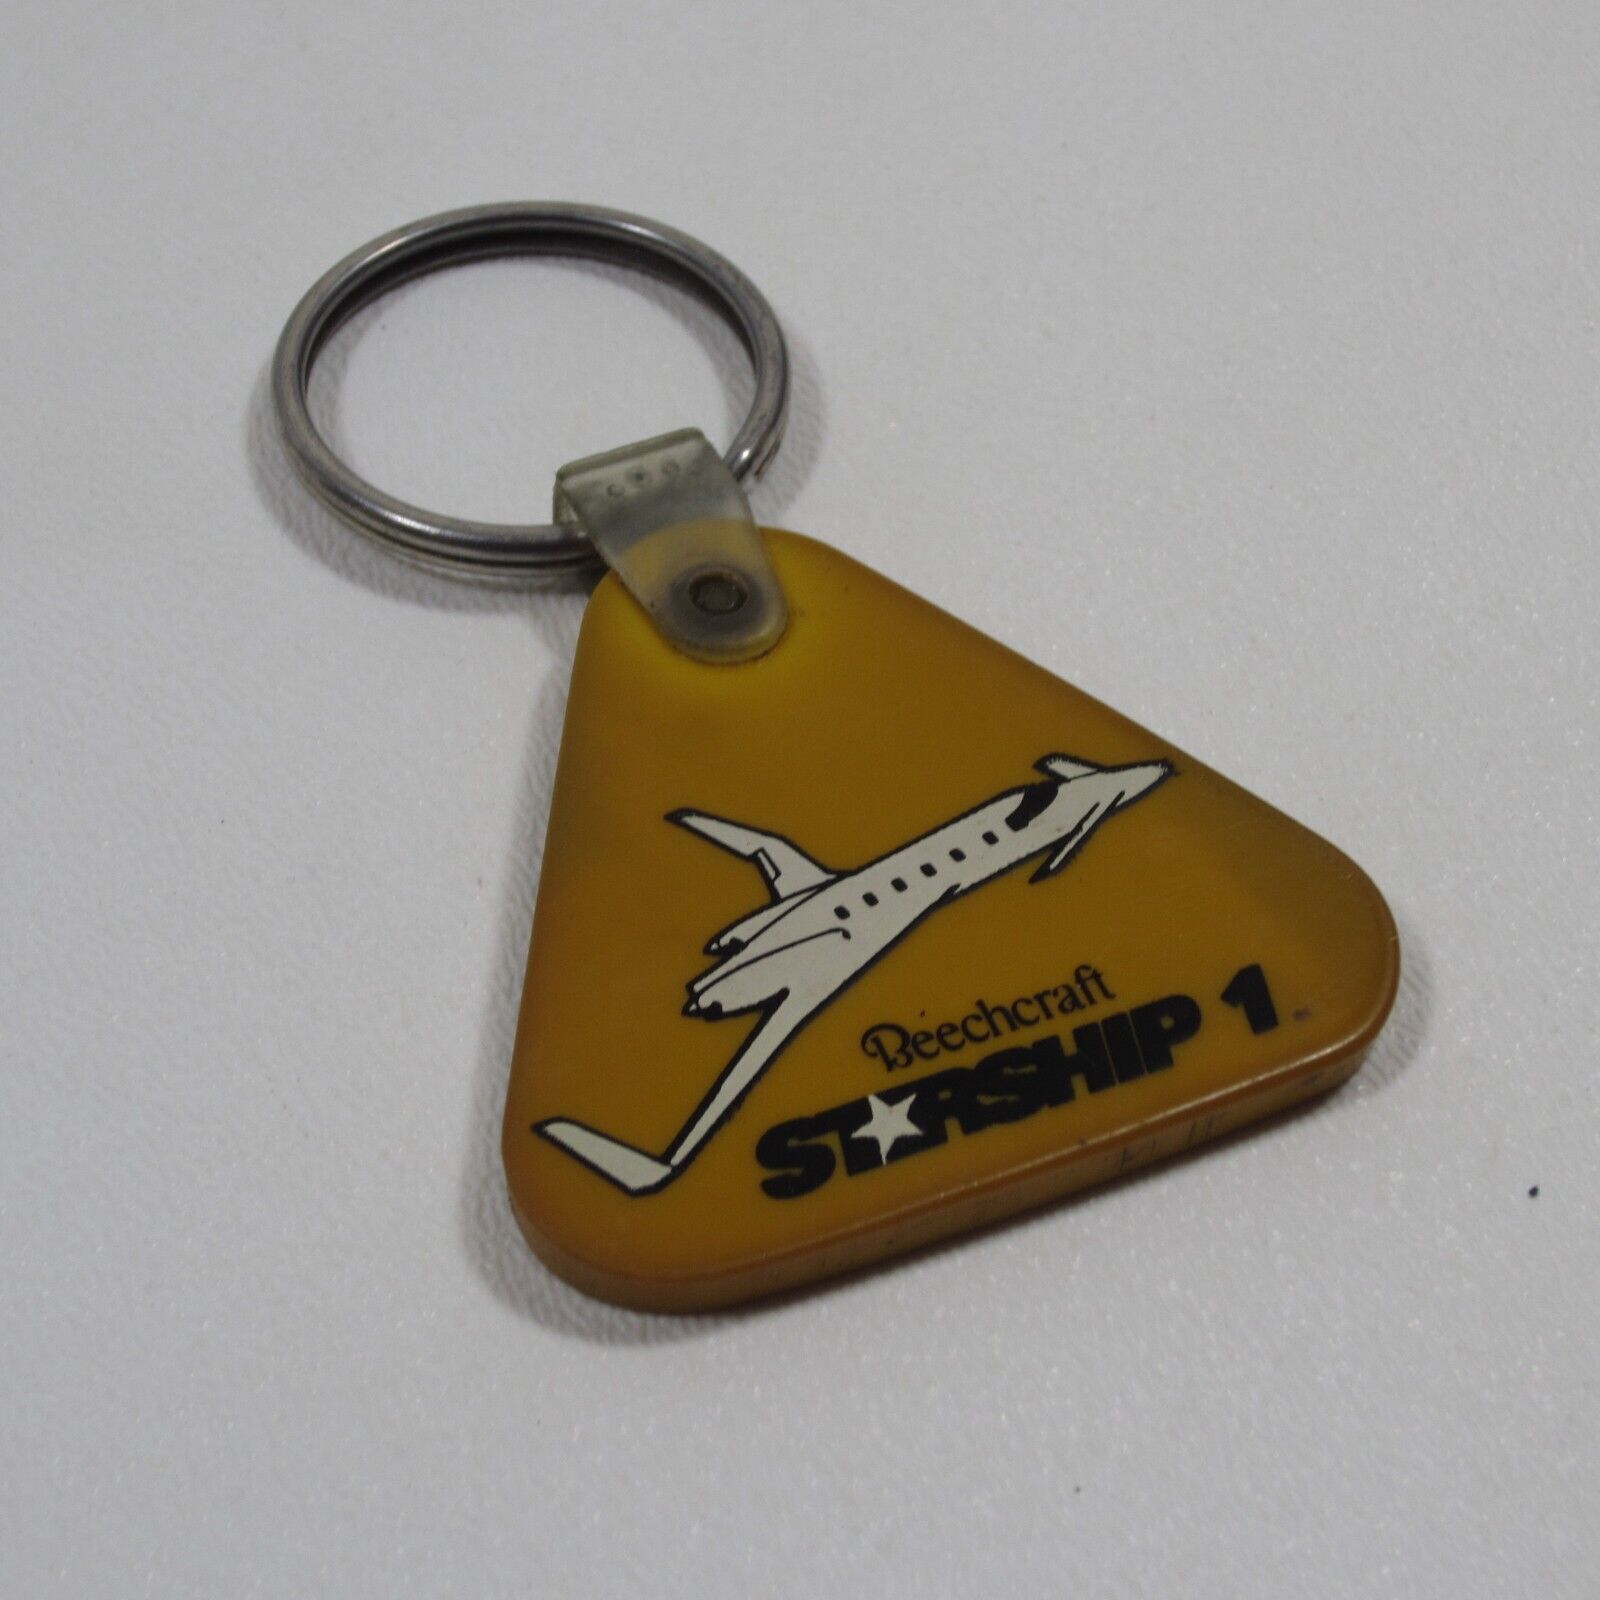 Beechcraft Starship 1 Airplane Key Chain Vintage